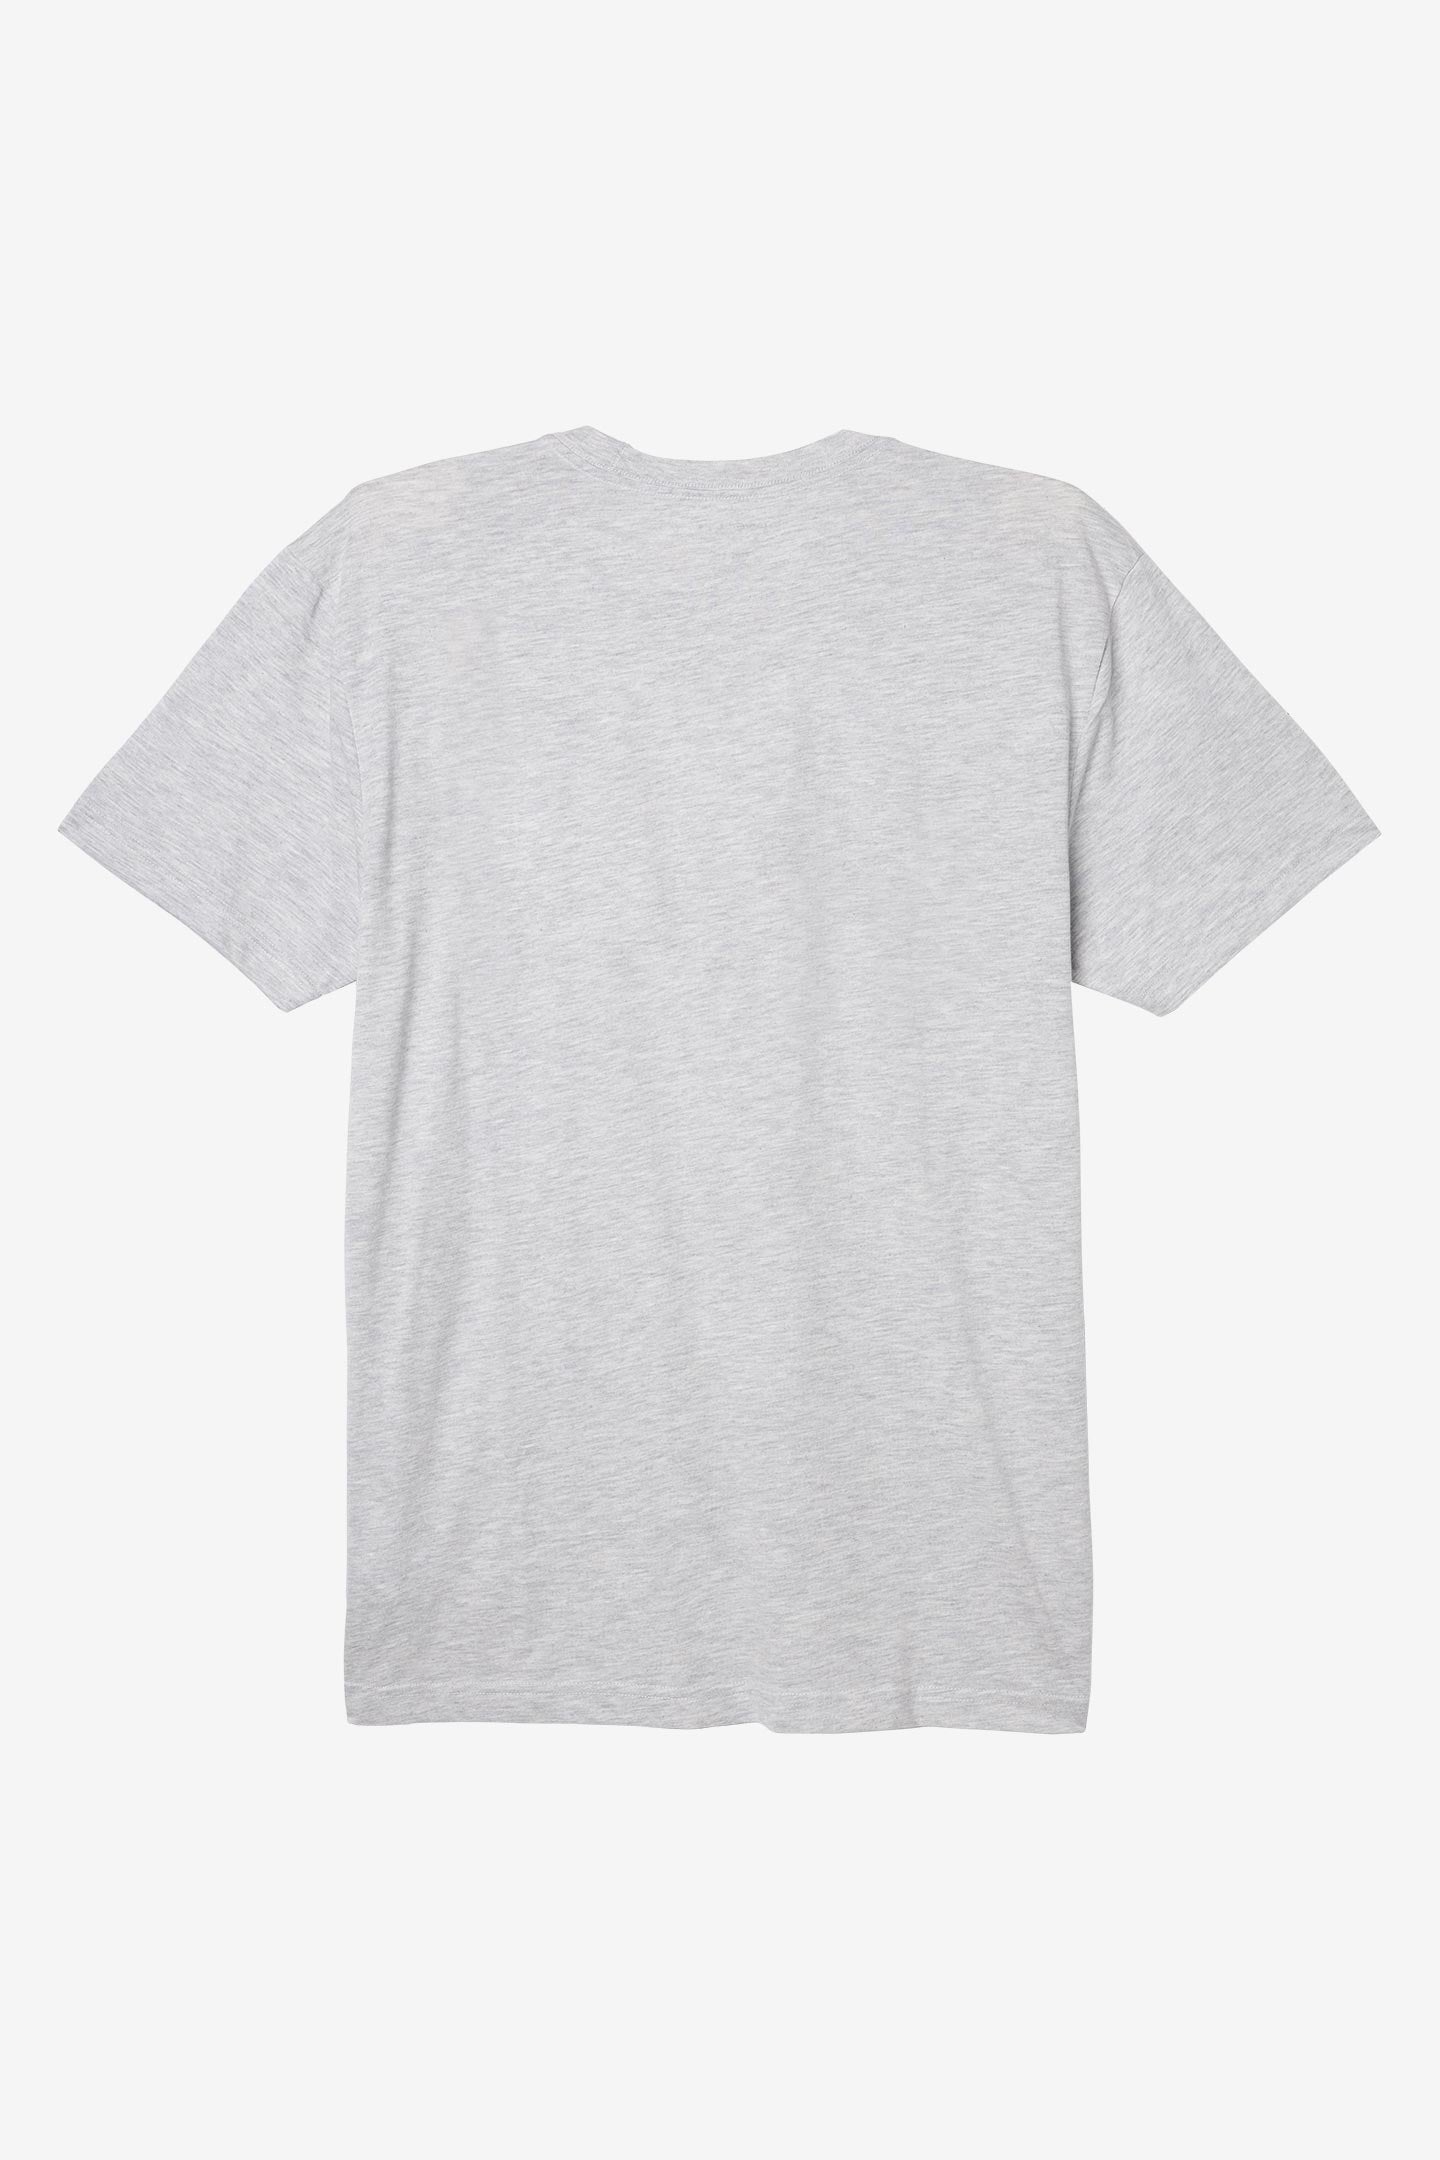 TRVLR Cossa Staple T-Shirt - Fog Grey